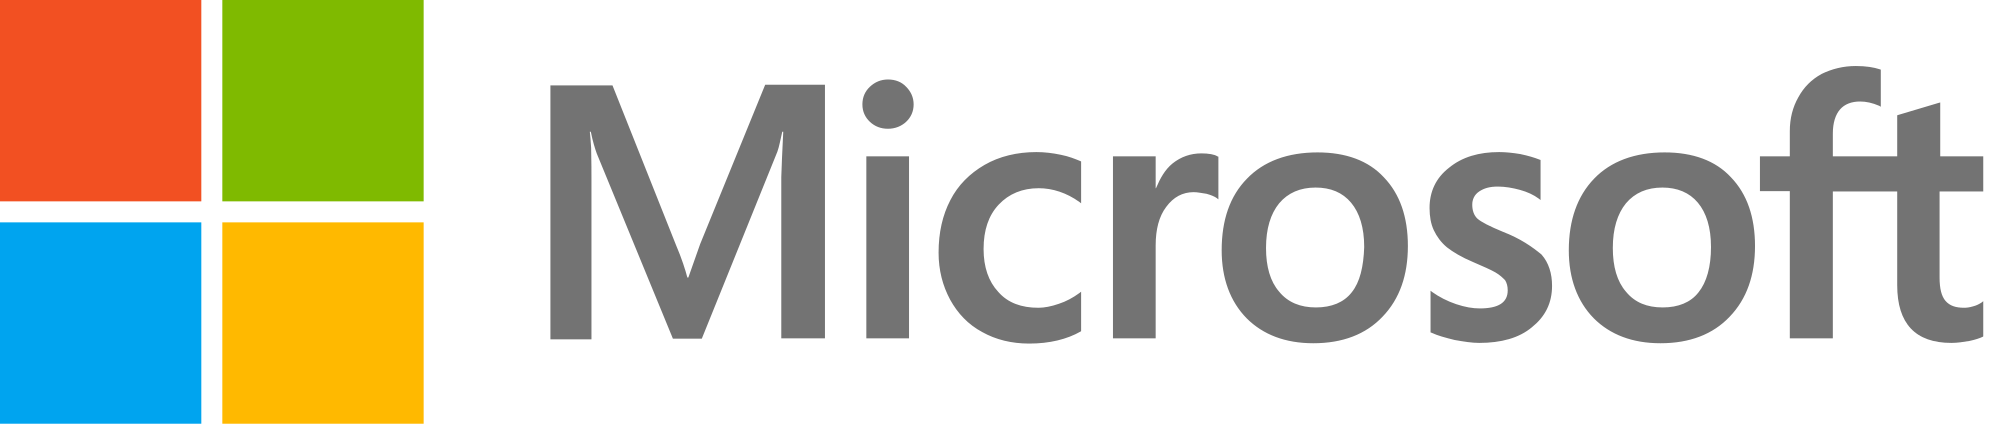 microsoft logo images png #2423